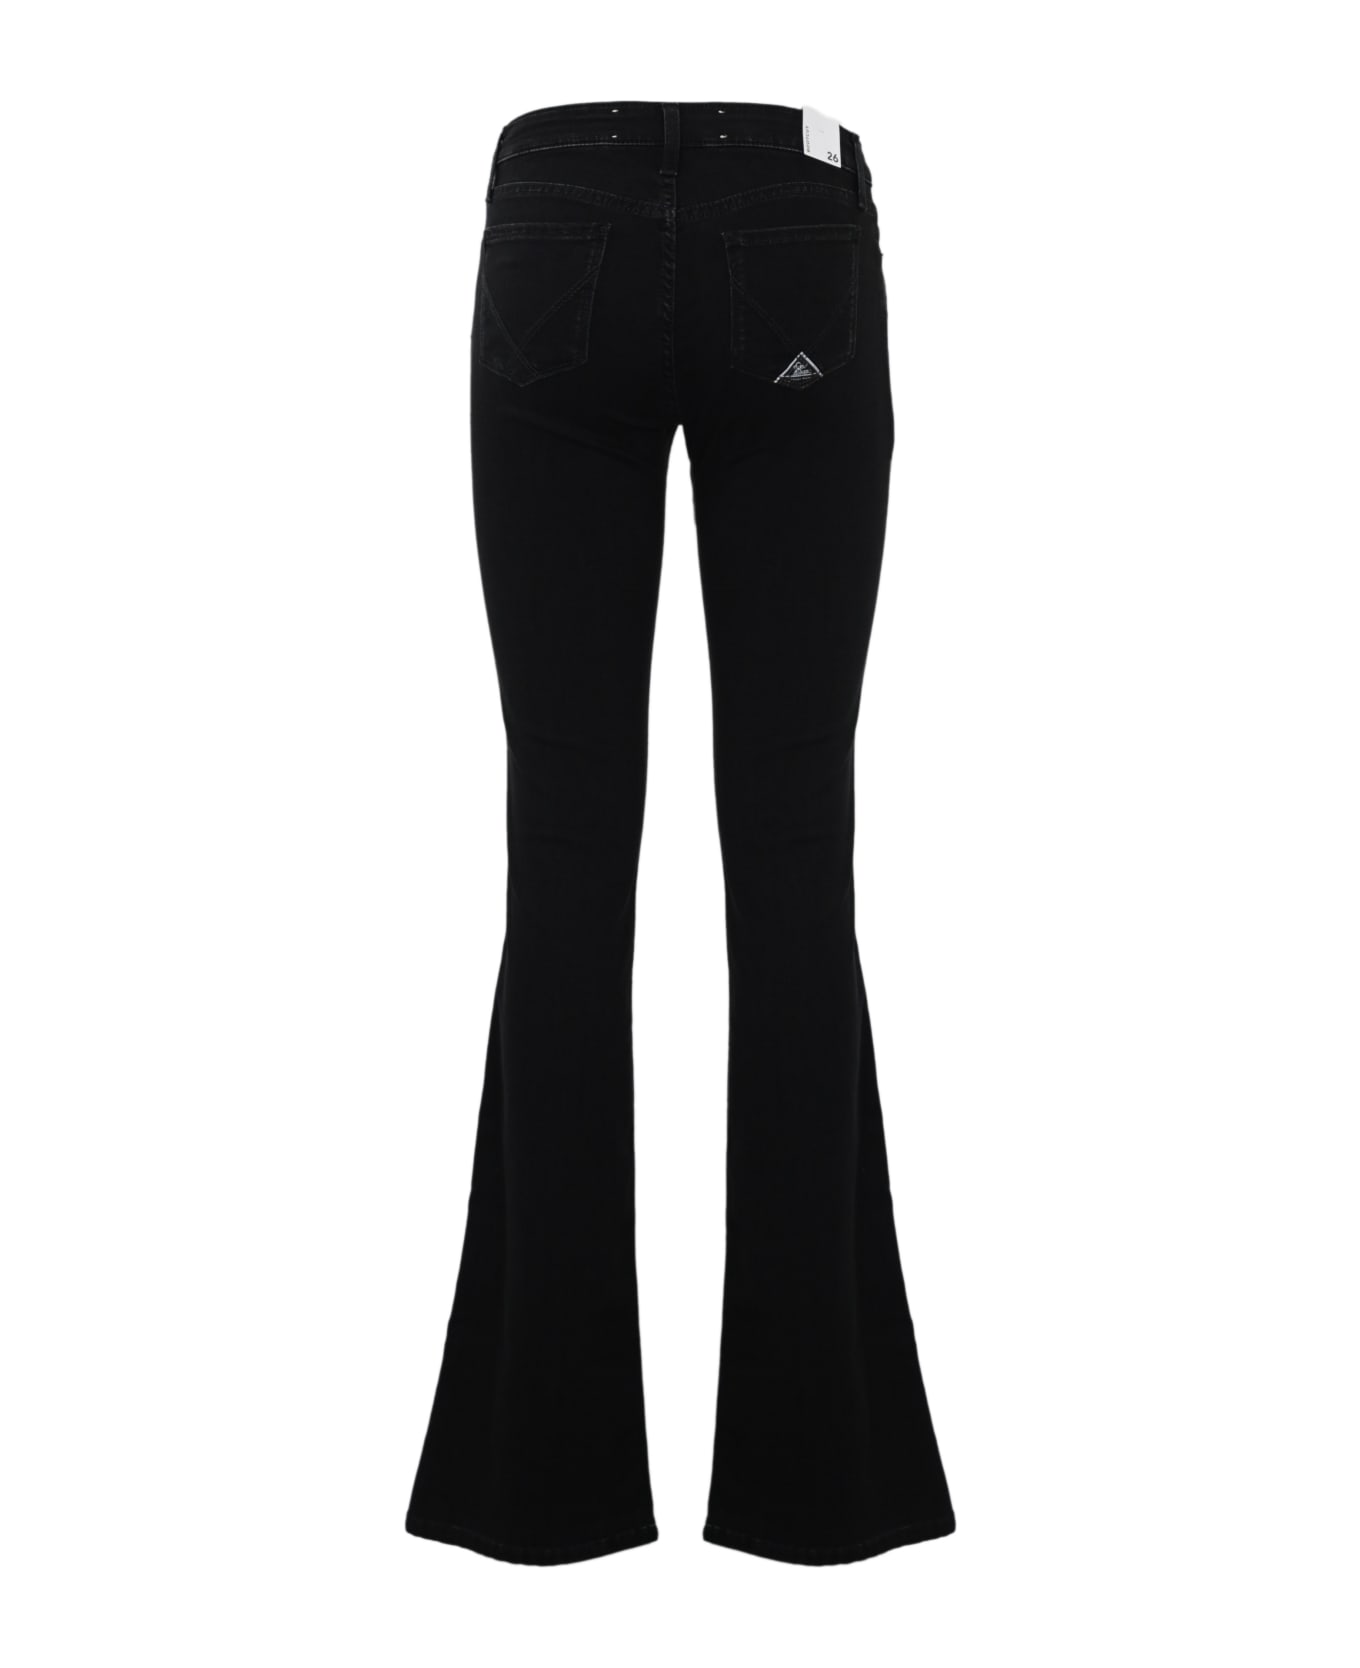 Roy Rogers Flare Jeans In Black Denim - Black